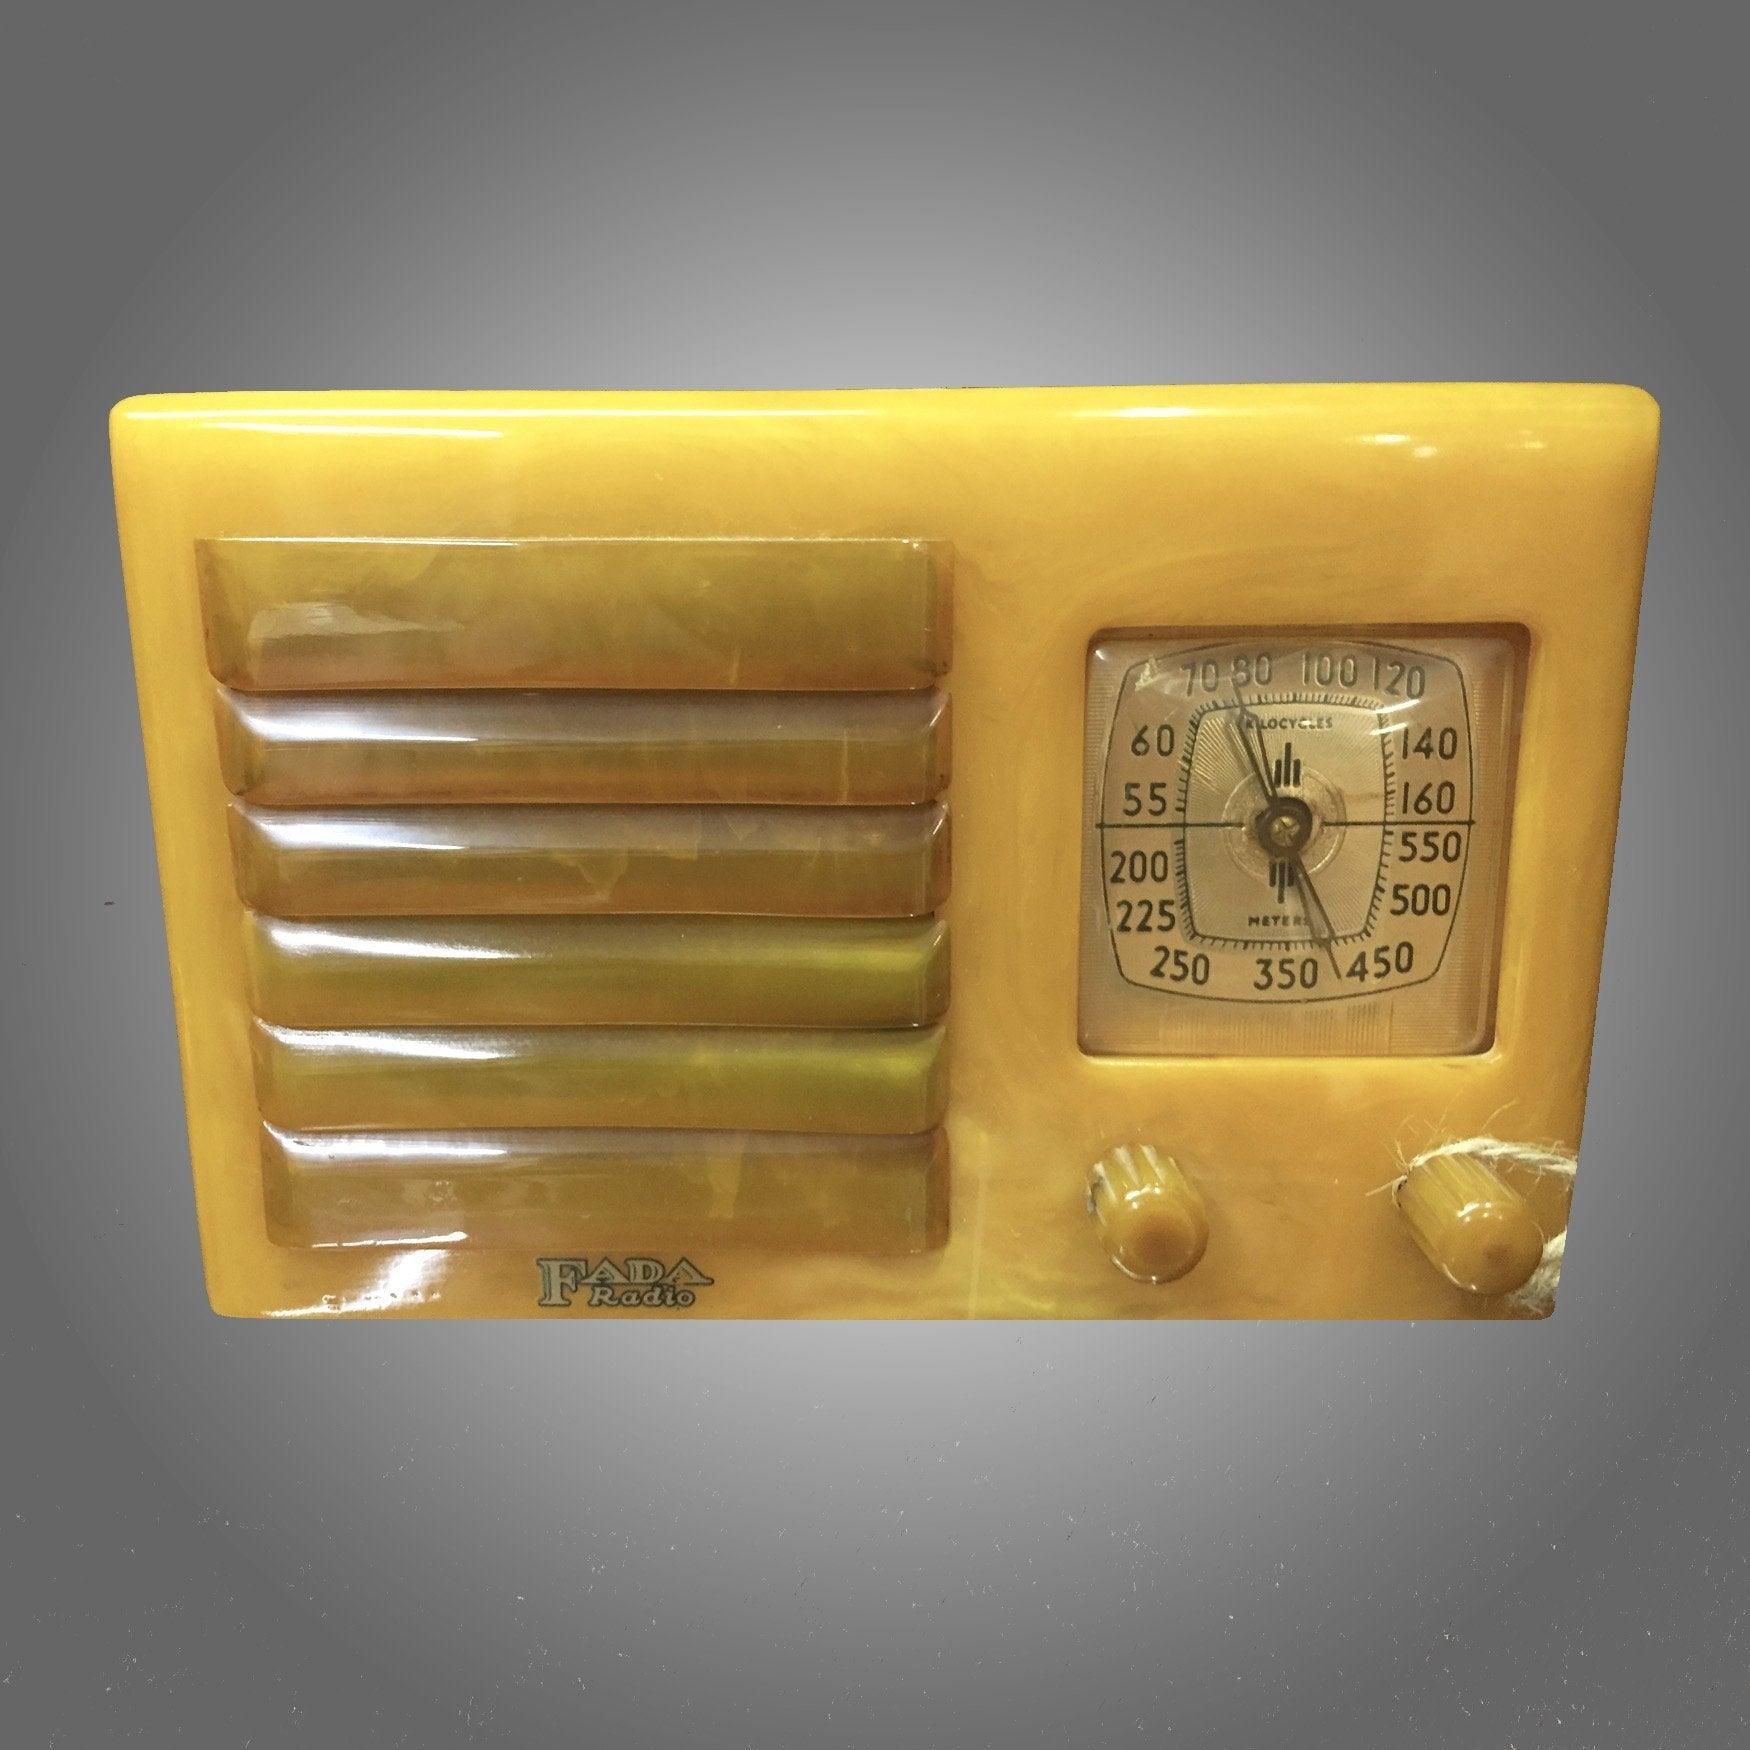 FADA 5F60 Catalin Radio - Onyx Grille